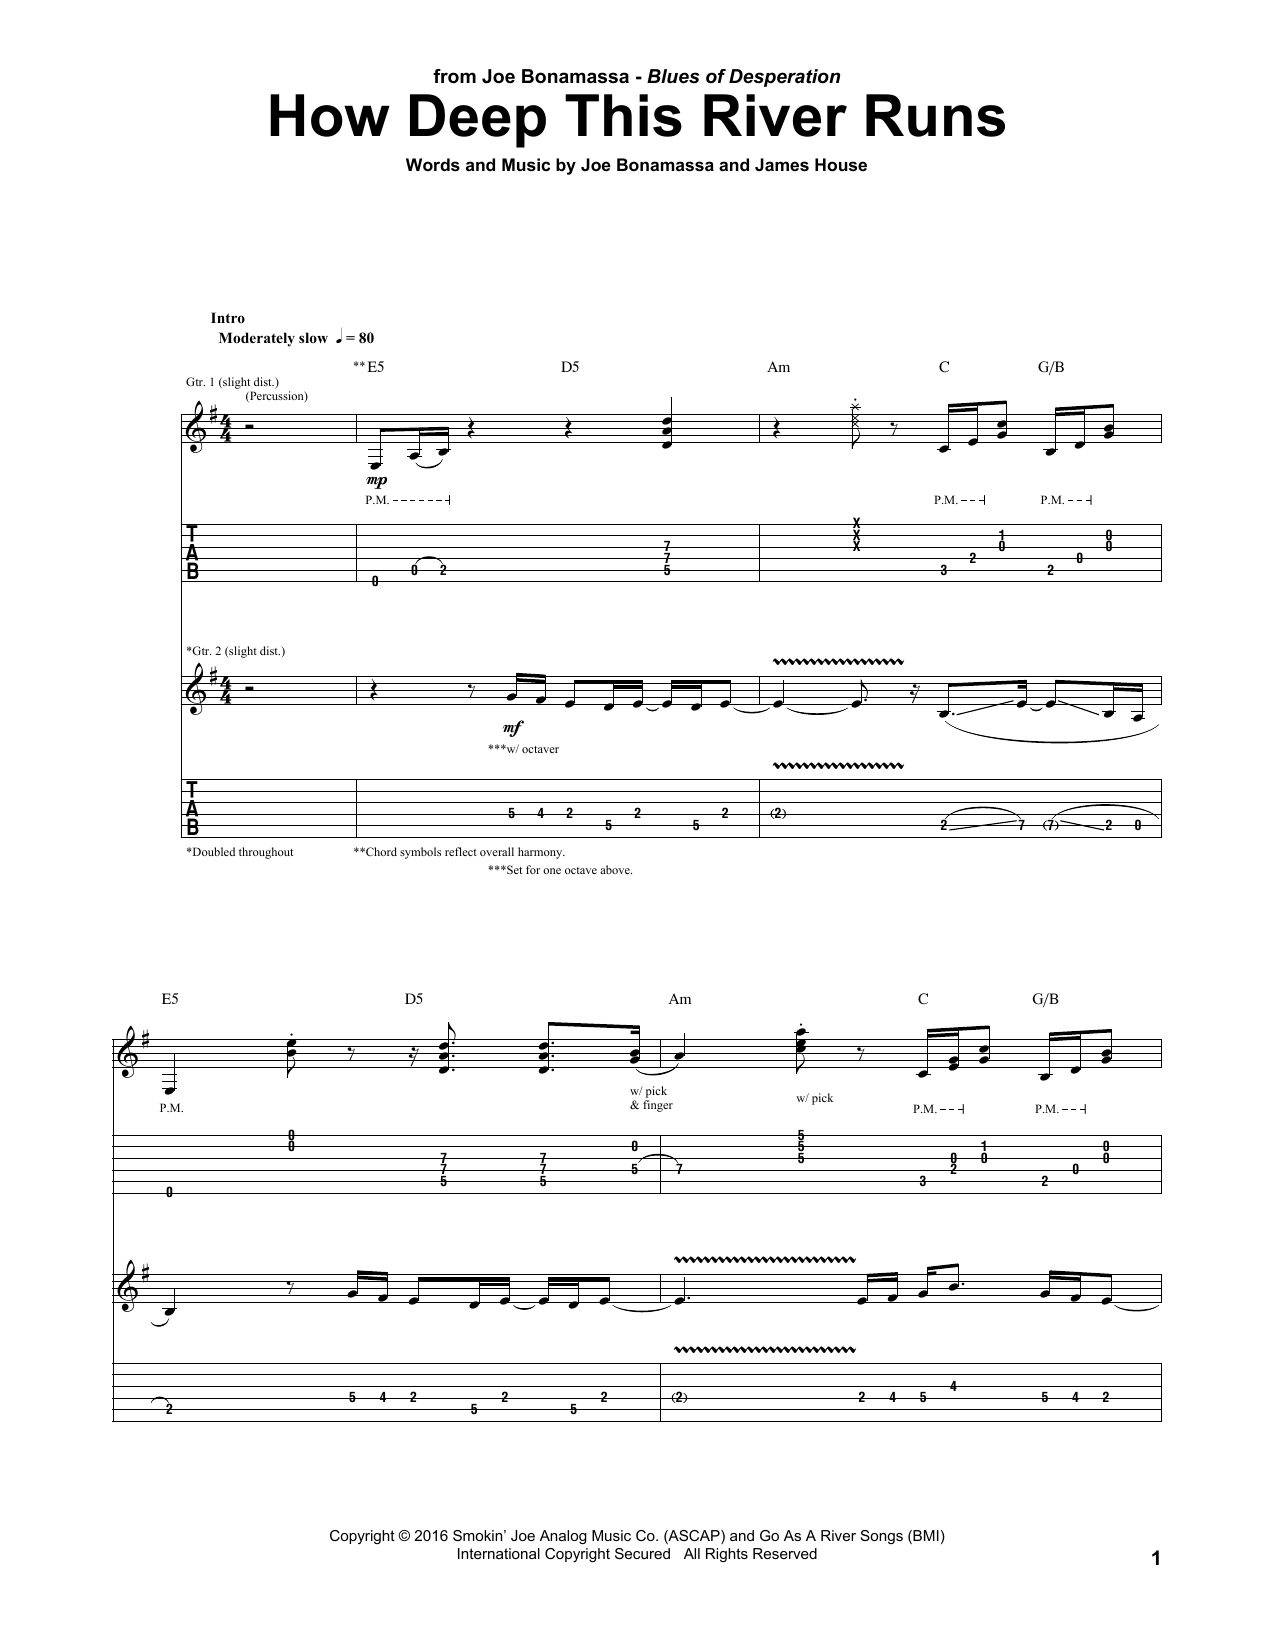 Joe Bonamassa How Deep This River Runs Sheet Music Notes & Chords for Guitar Tab - Download or Print PDF